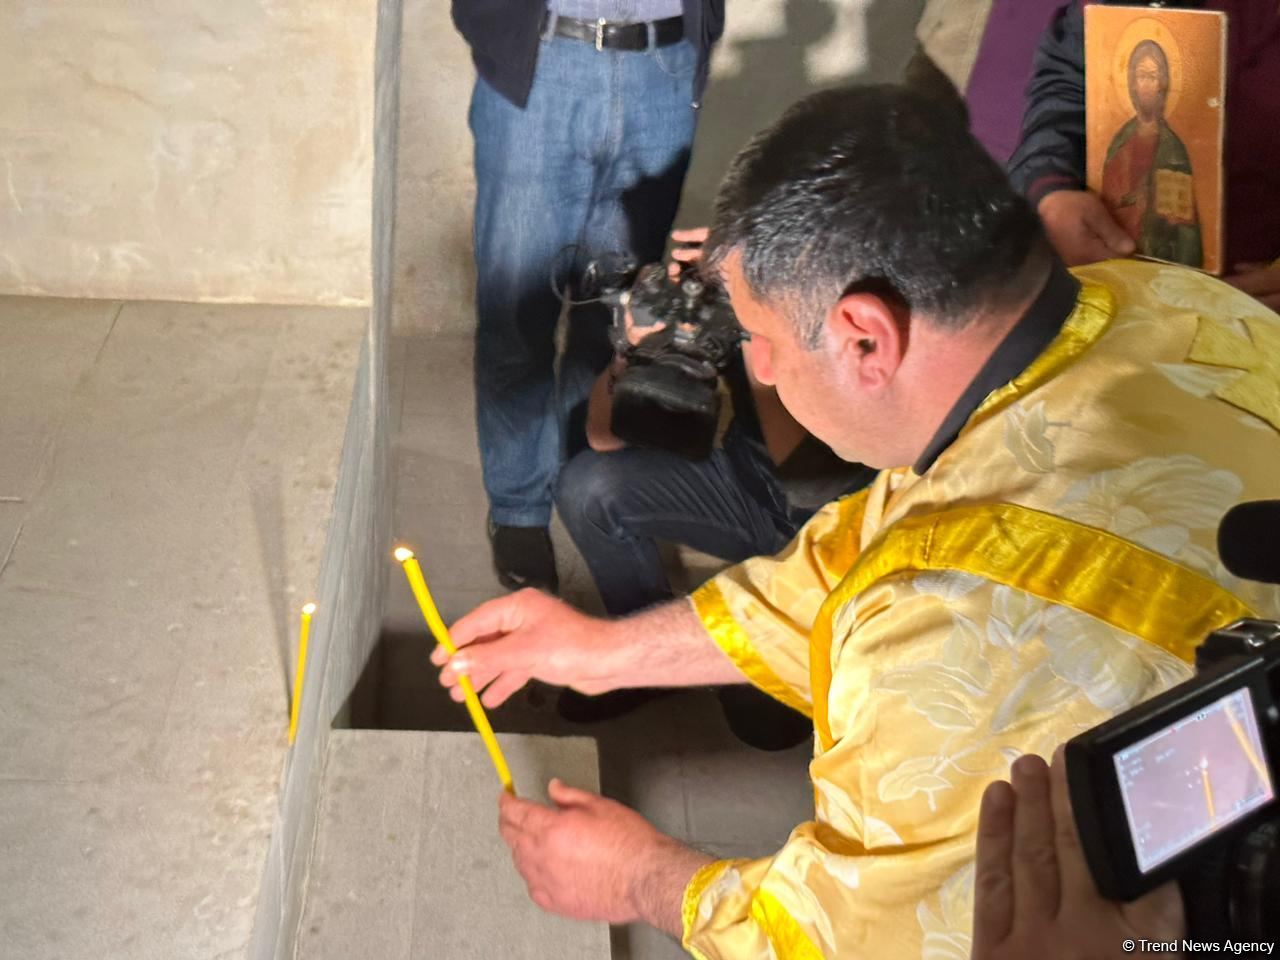 Reps of Christian, Jewish communities of Azerbaijan visit Khudavang monastery complex (PHOTO)